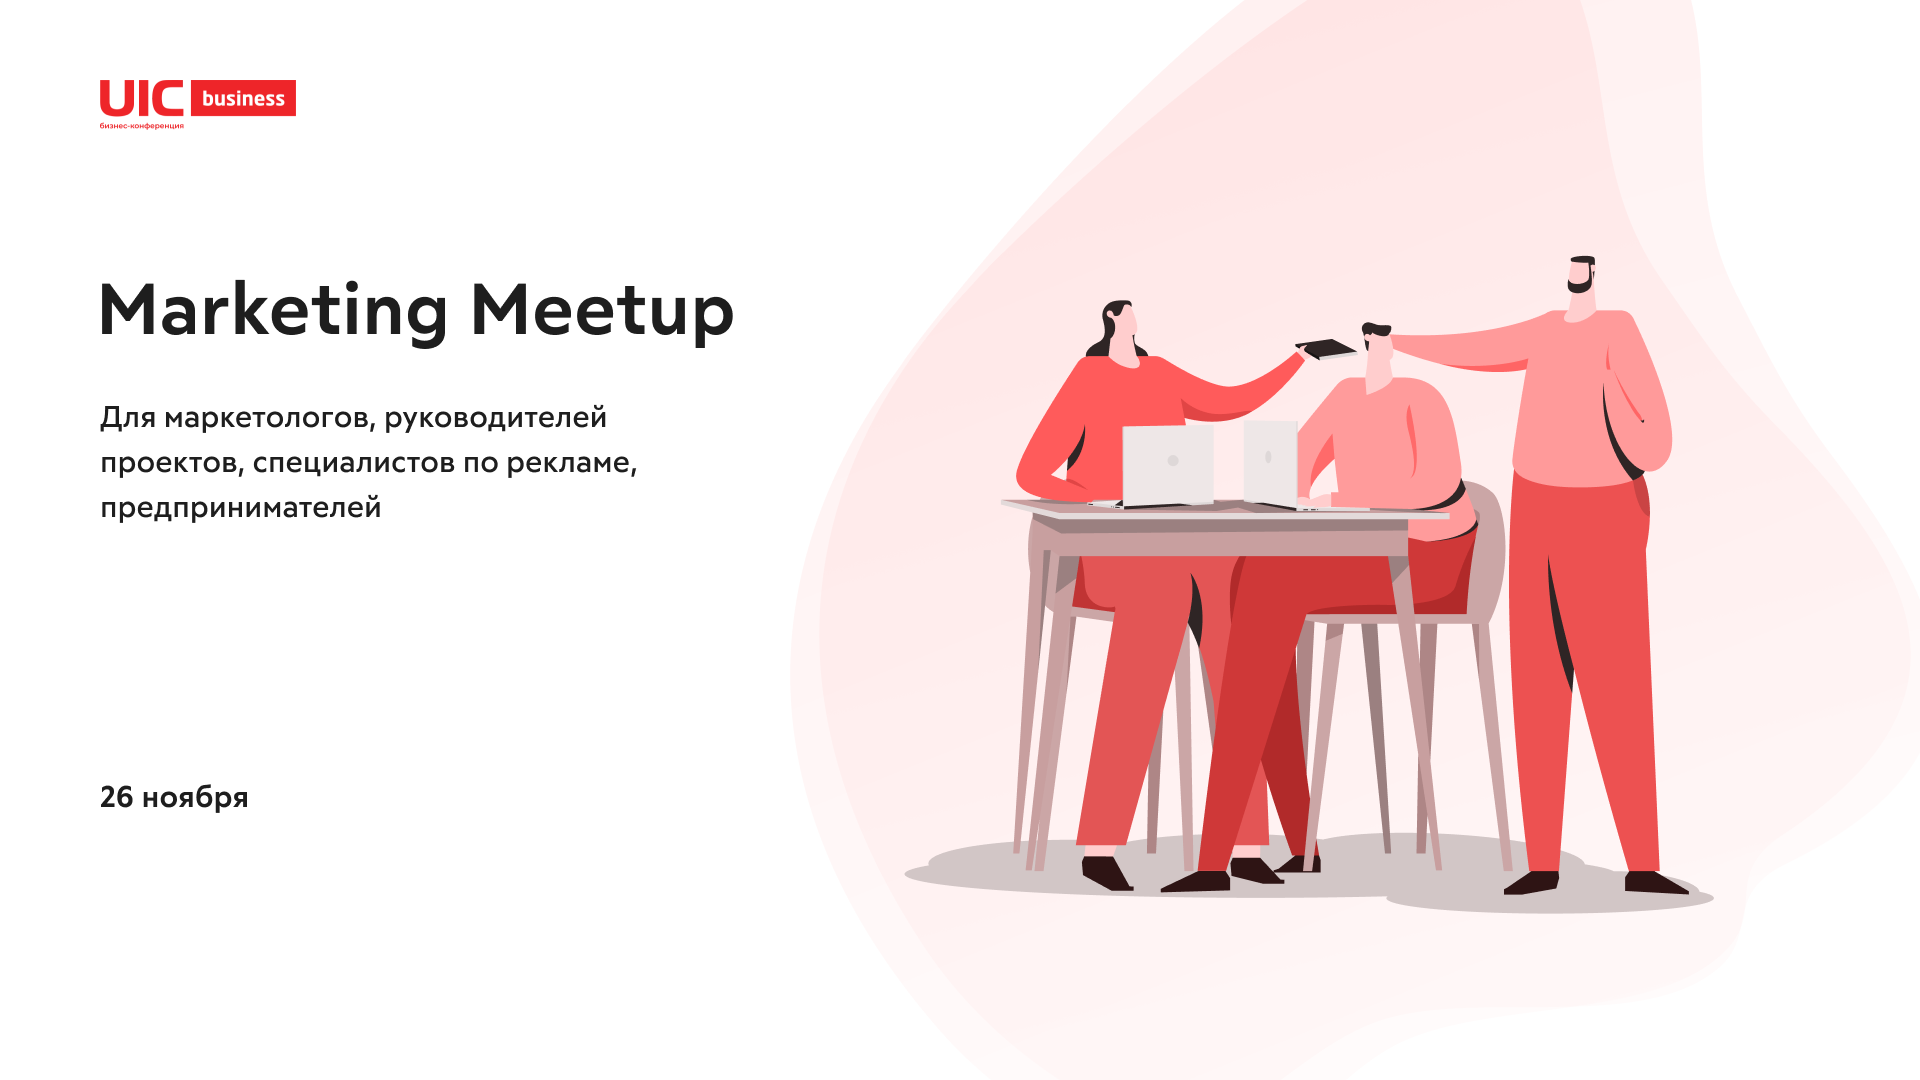 Marketing Meetup